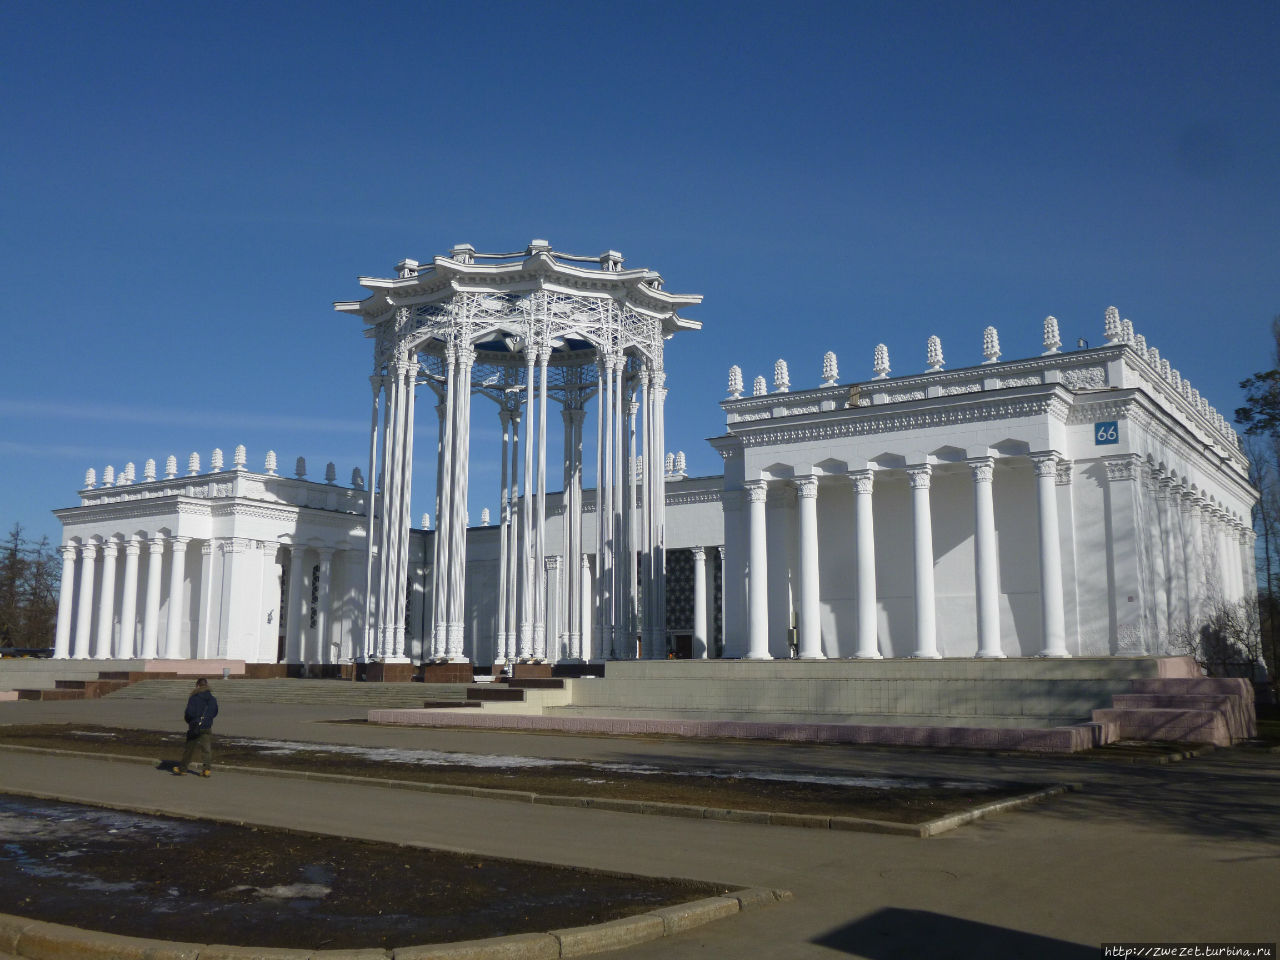 Прогулка вокруг Храма Коммунизма Москва, Россия